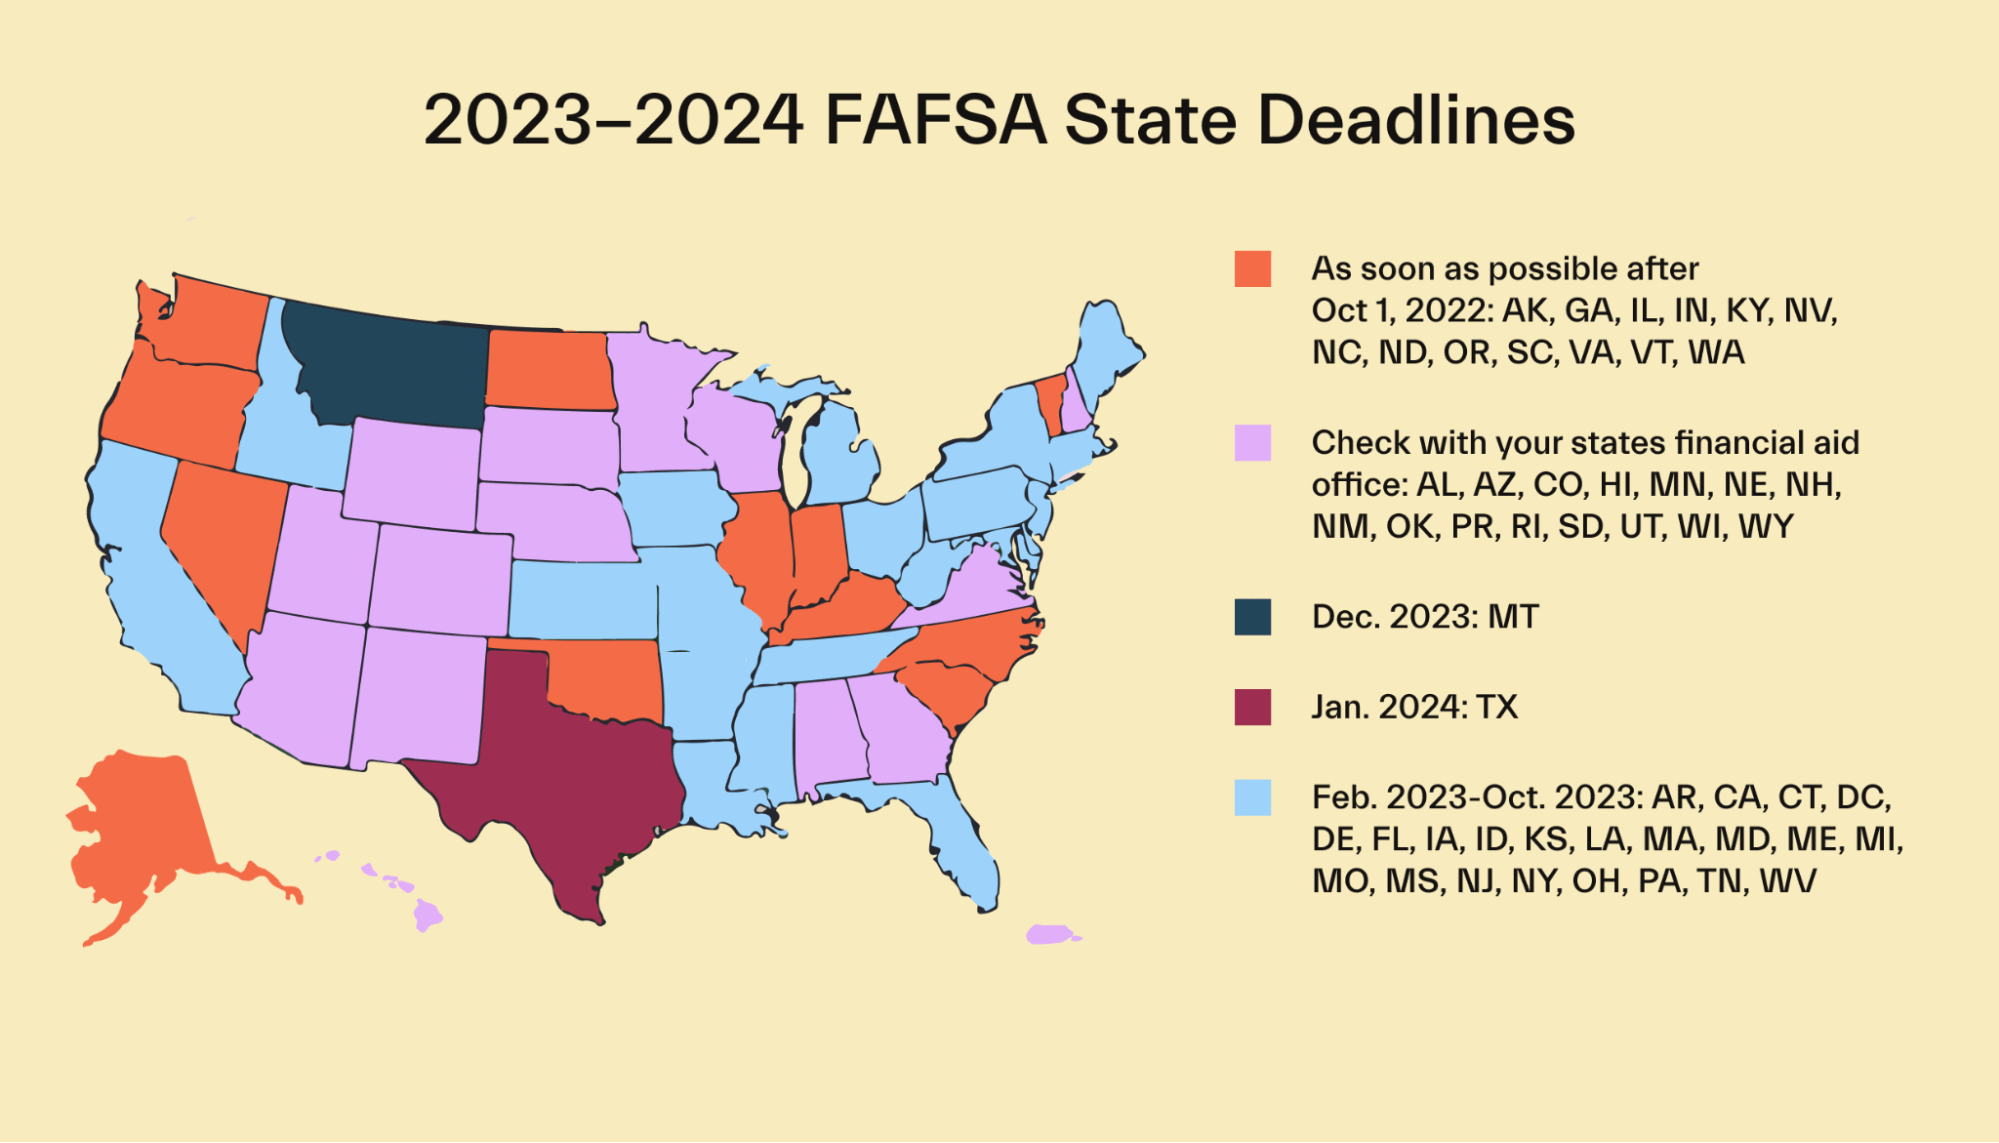 FAFSA state deadlines